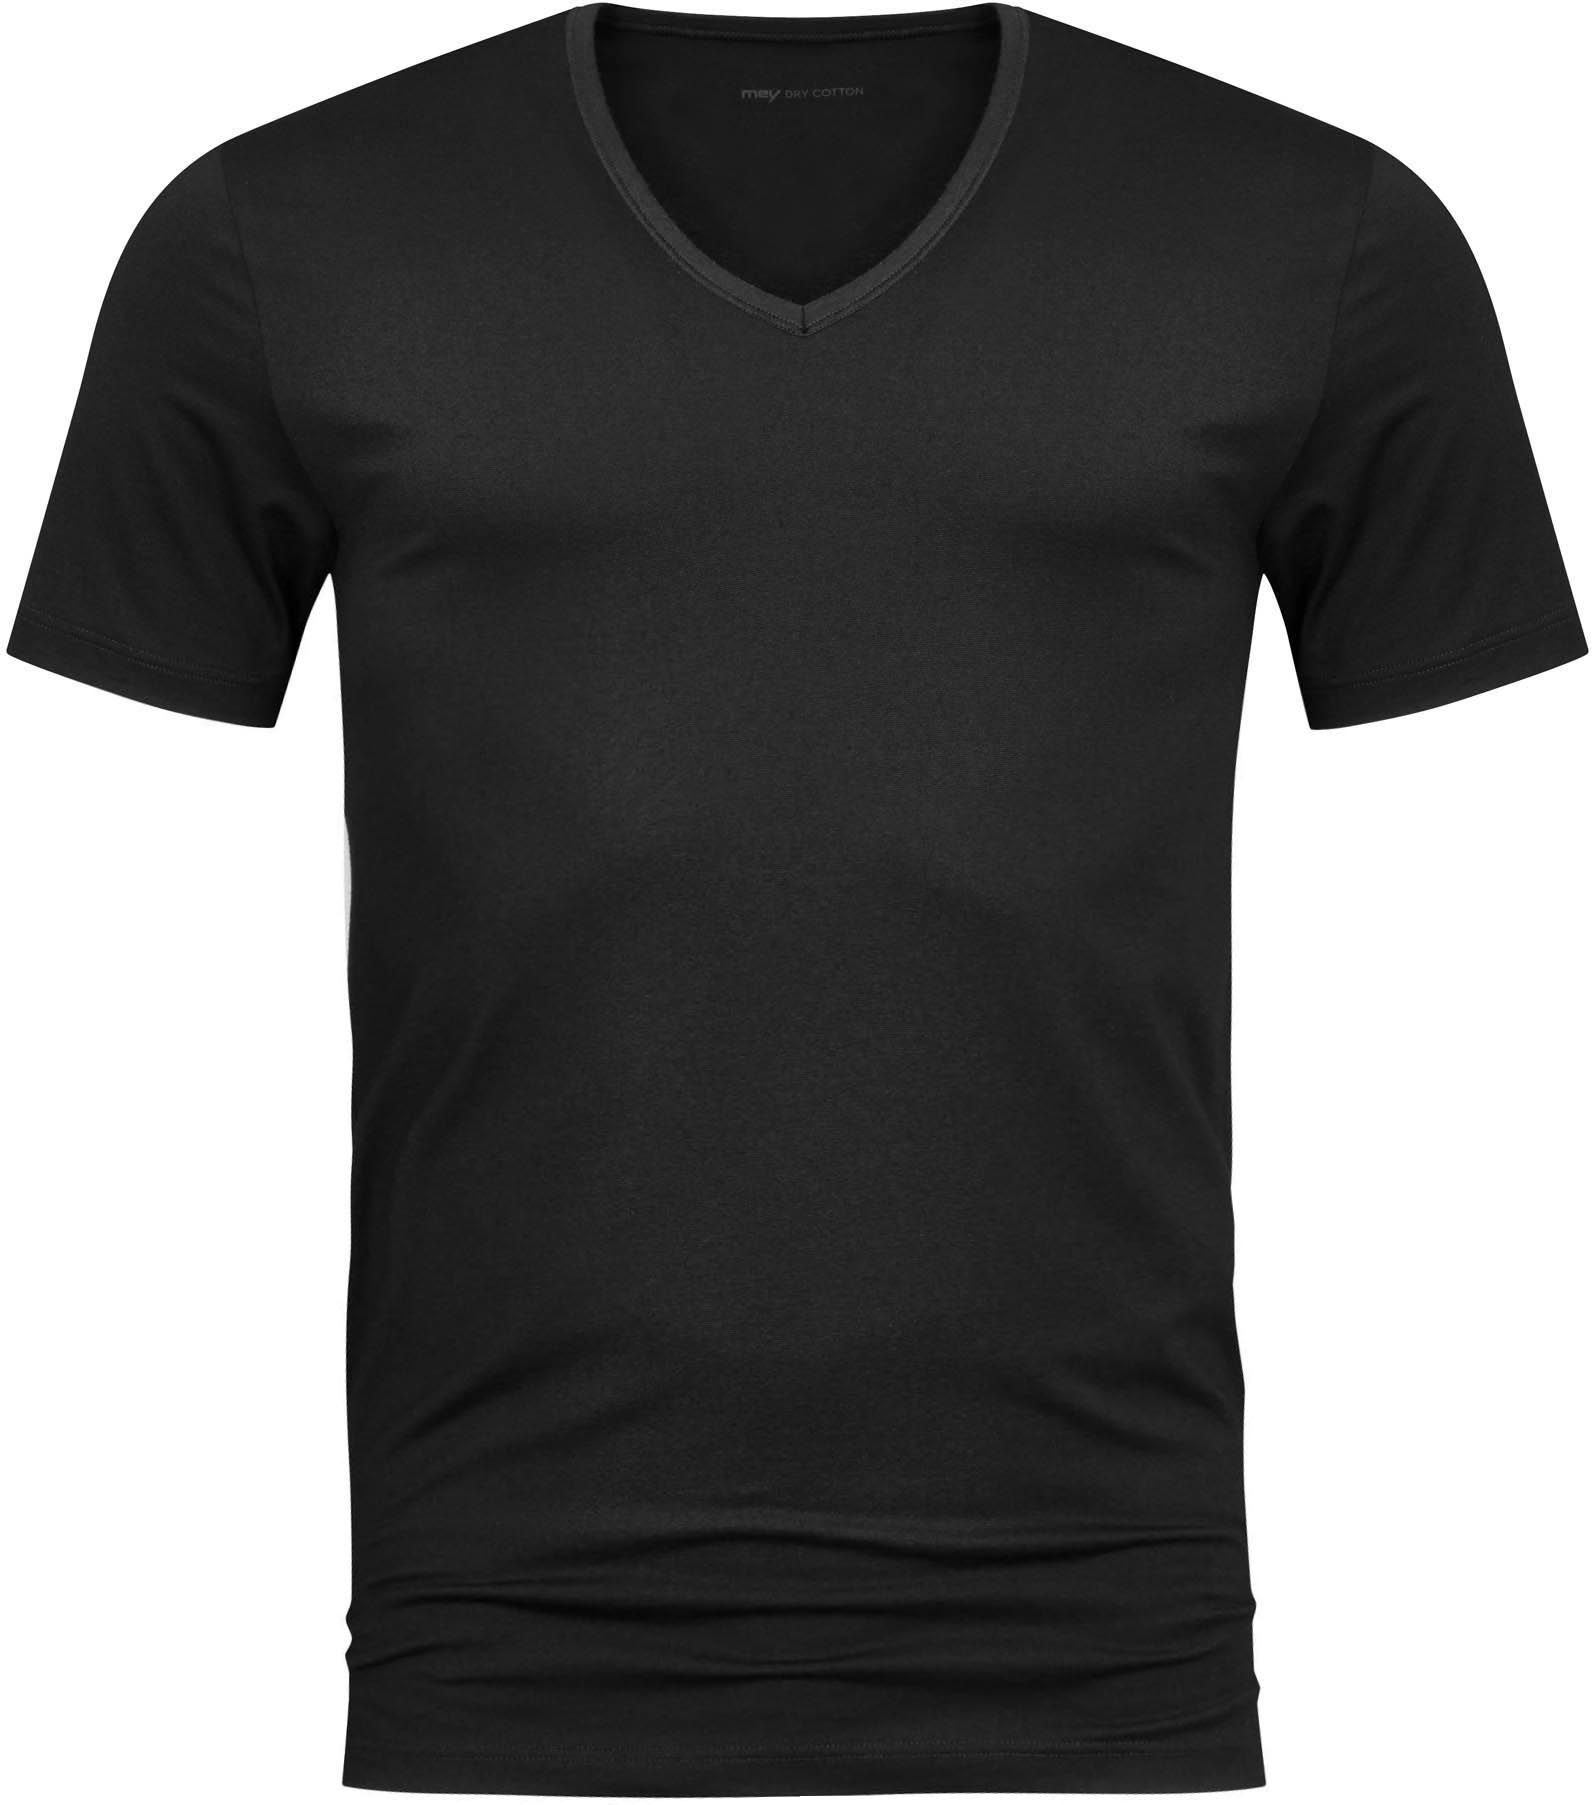 Mey V-neck Dry Cotton T-shirt Black size L